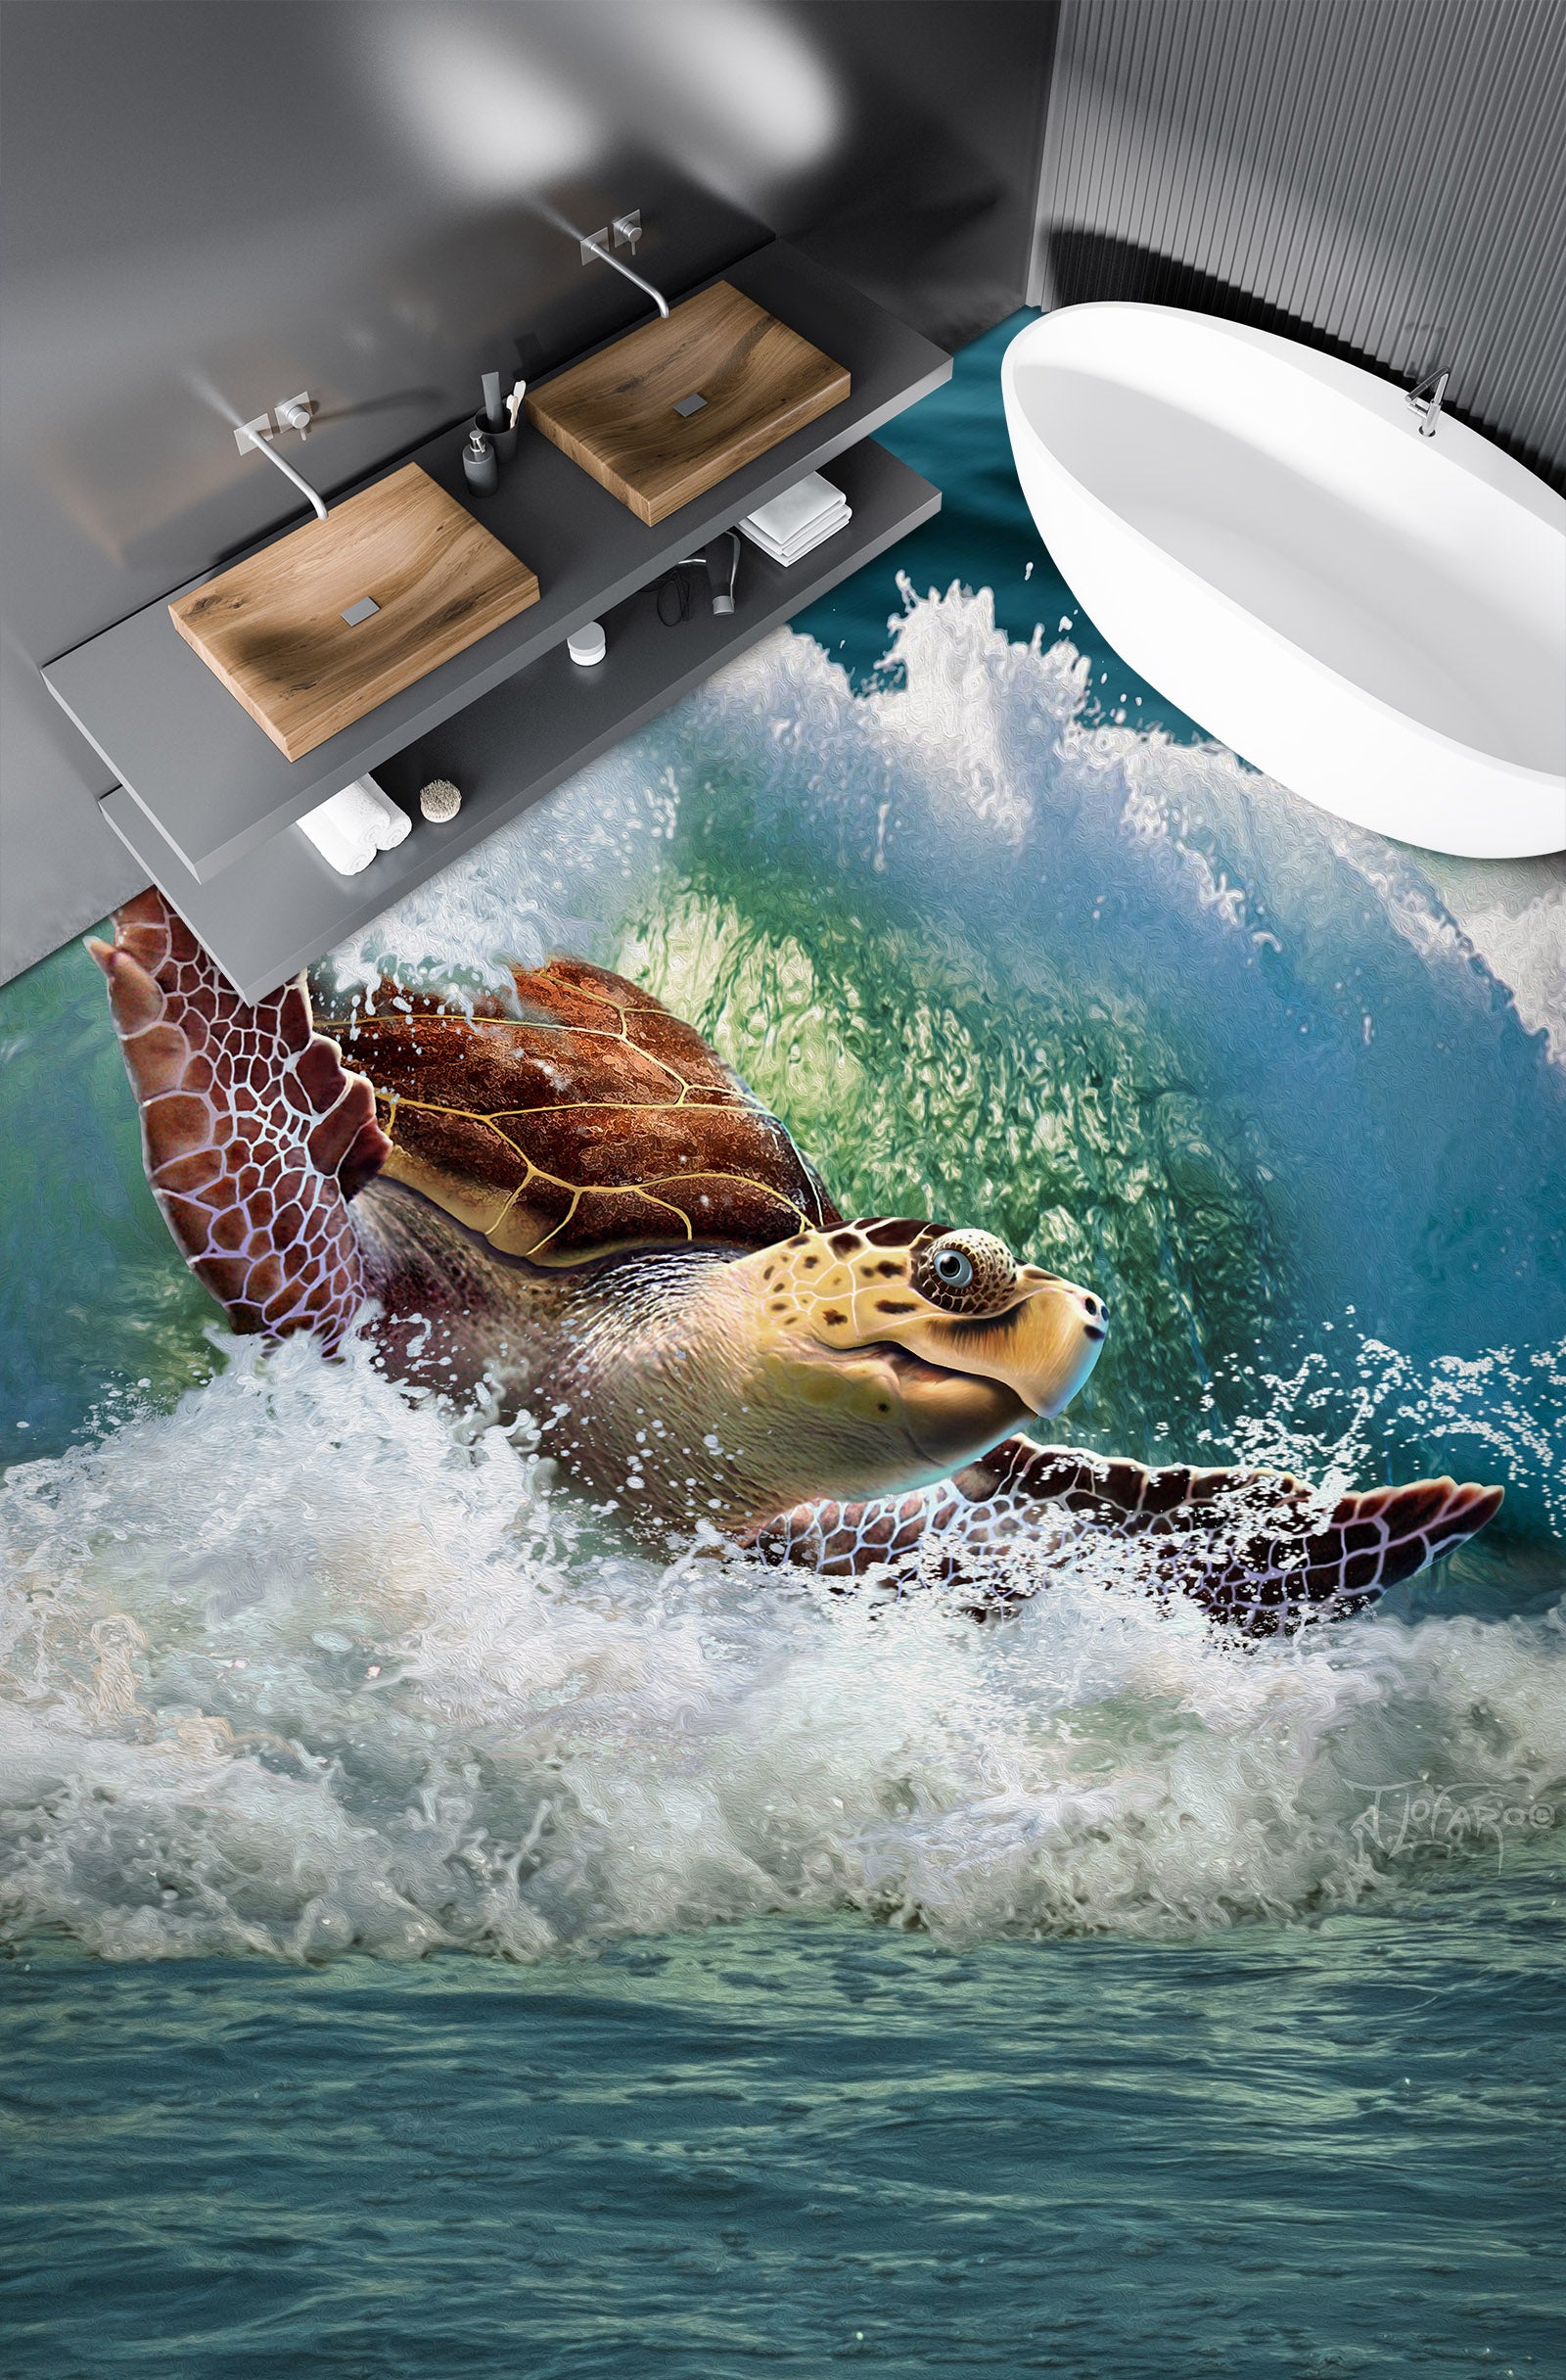 3D Sea Turtle Waves 96225 Jerry LoFaro Floor Mural  Wallpaper Murals Self-Adhesive Removable Print Epoxy